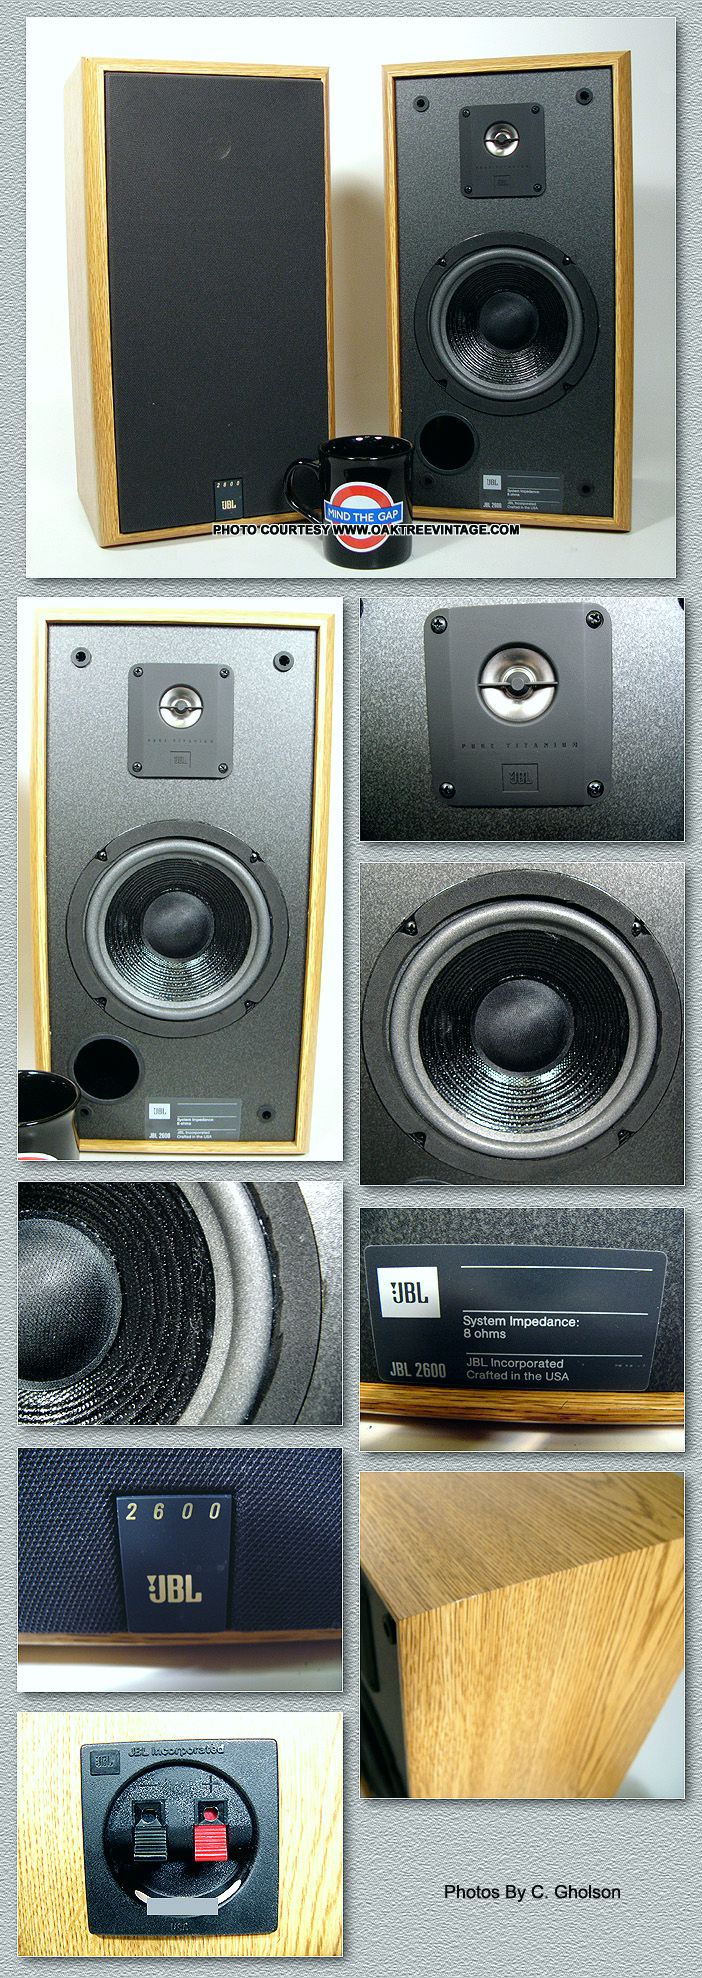 Sold Stereo Speakers Jbl